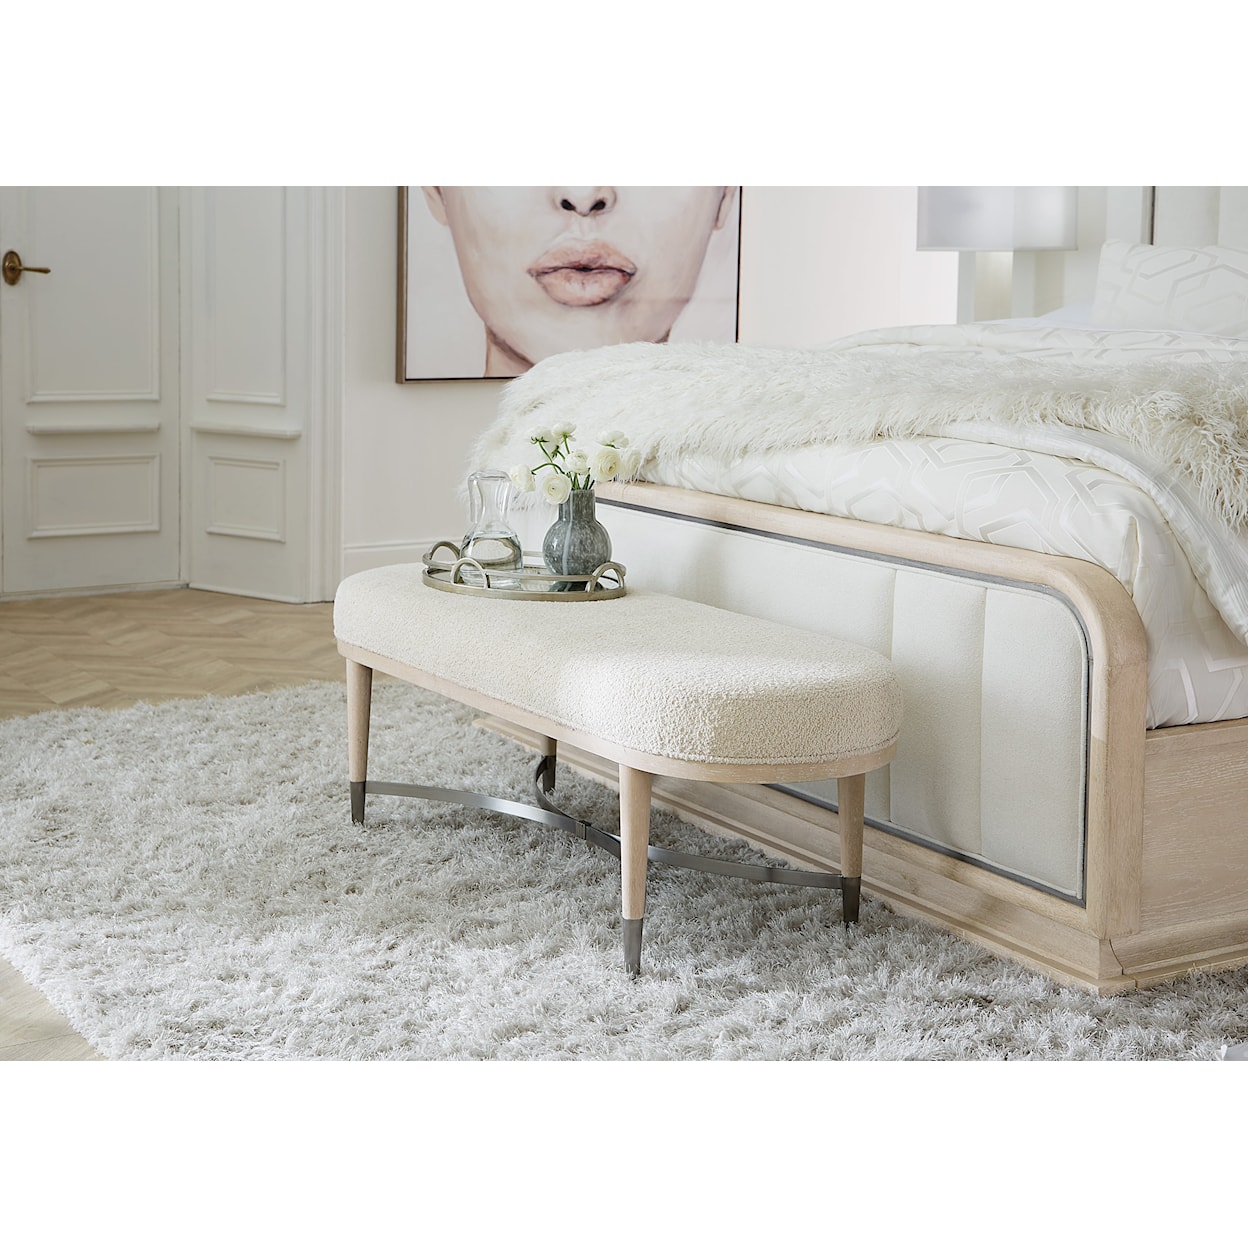 Hooker Furniture Nouveau Chic Upholstered Bench